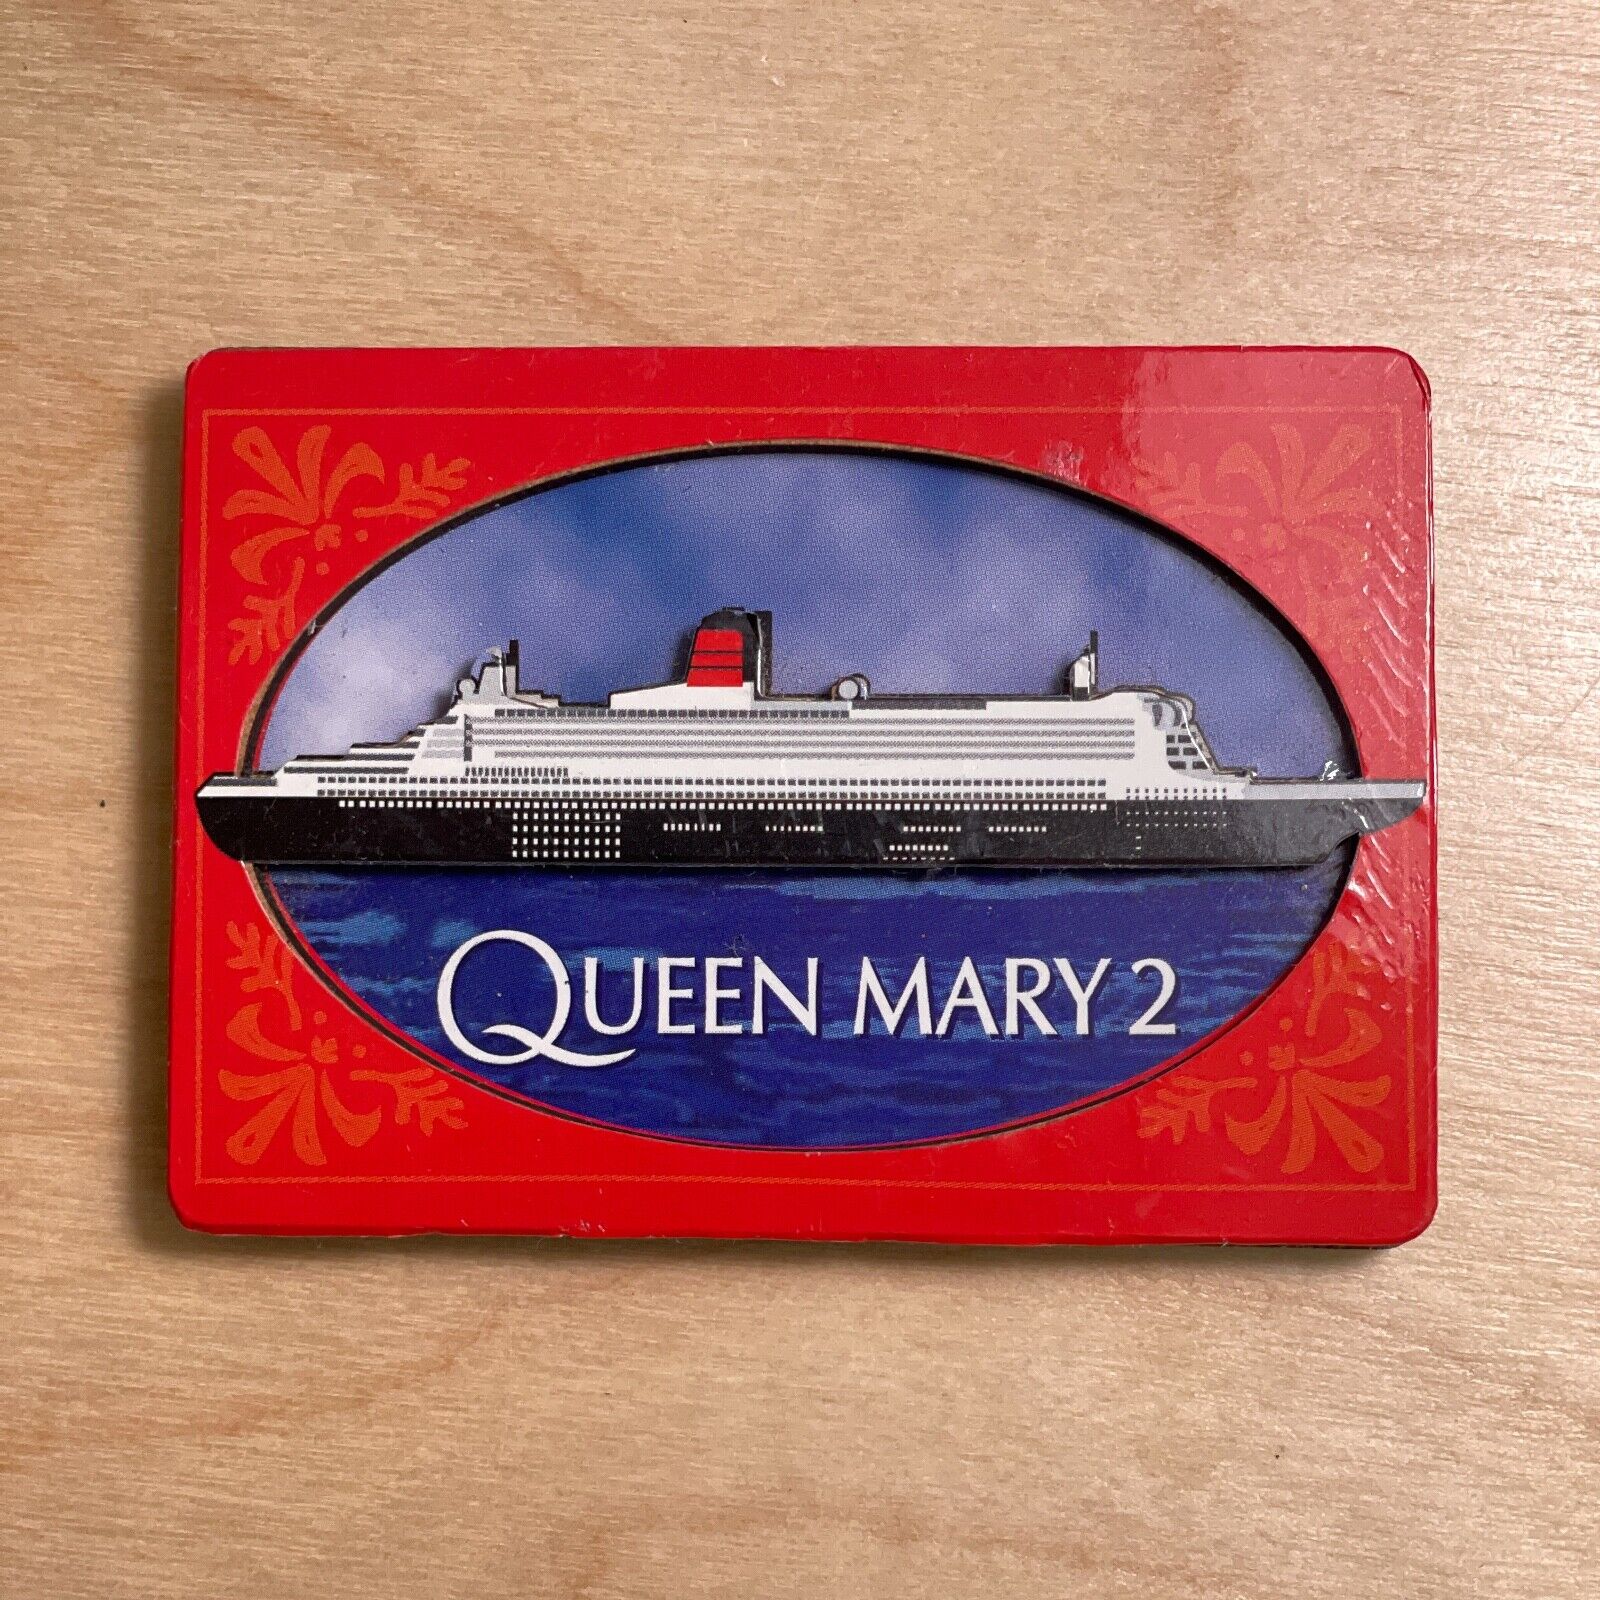 Queen Mary 2 - Souvenir Refrigerator Fridge Magnet